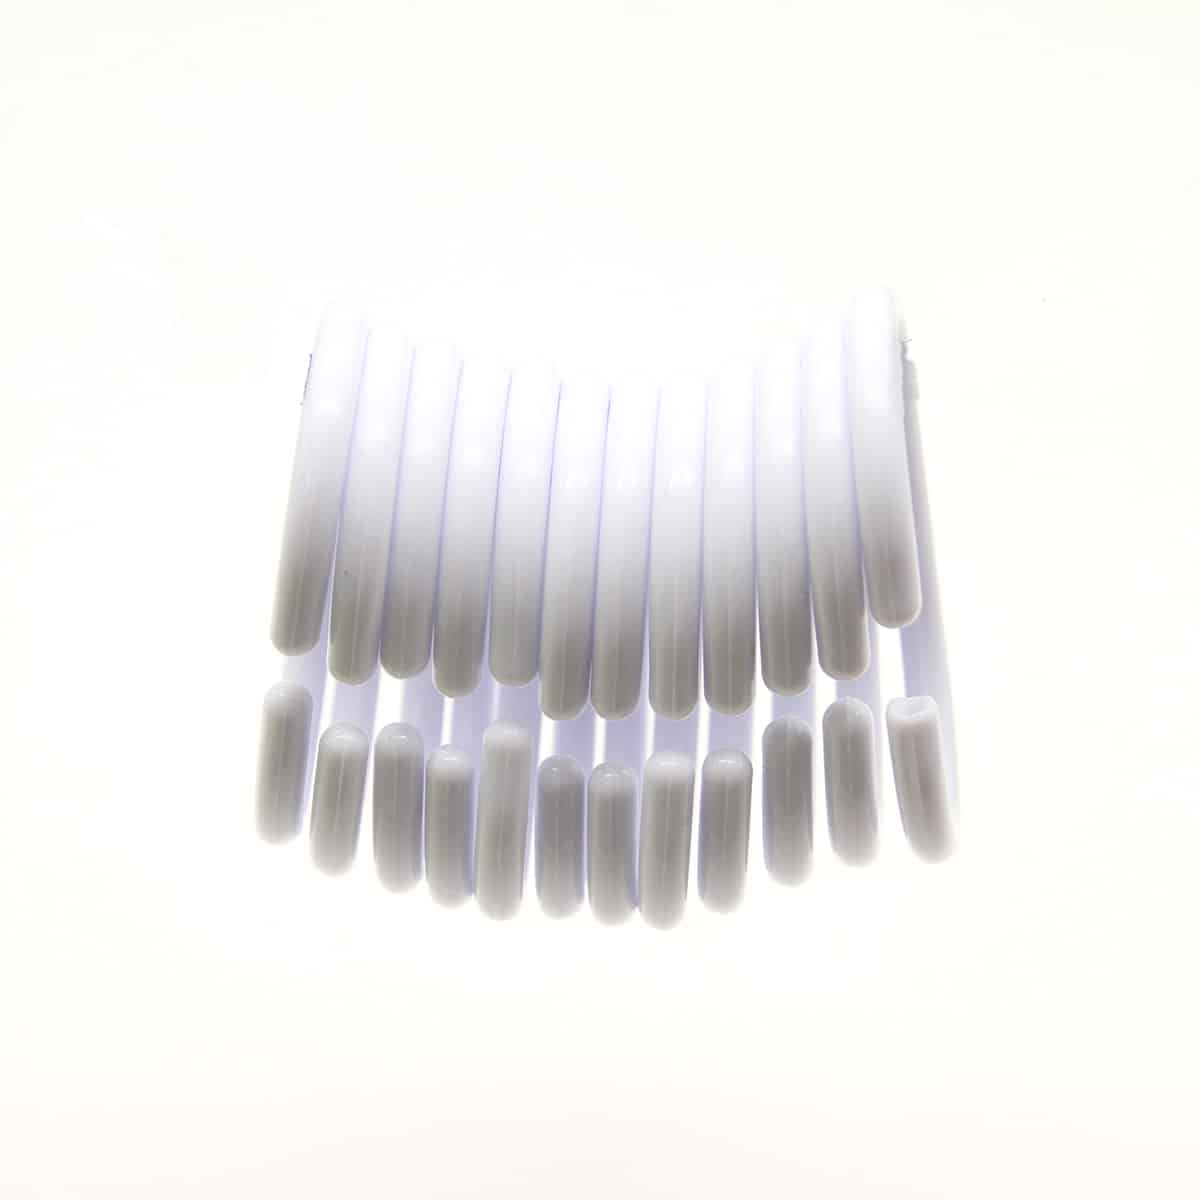 Evideco Shower Curtain Rings Plastic Hooks (Set of 12) - Solid White